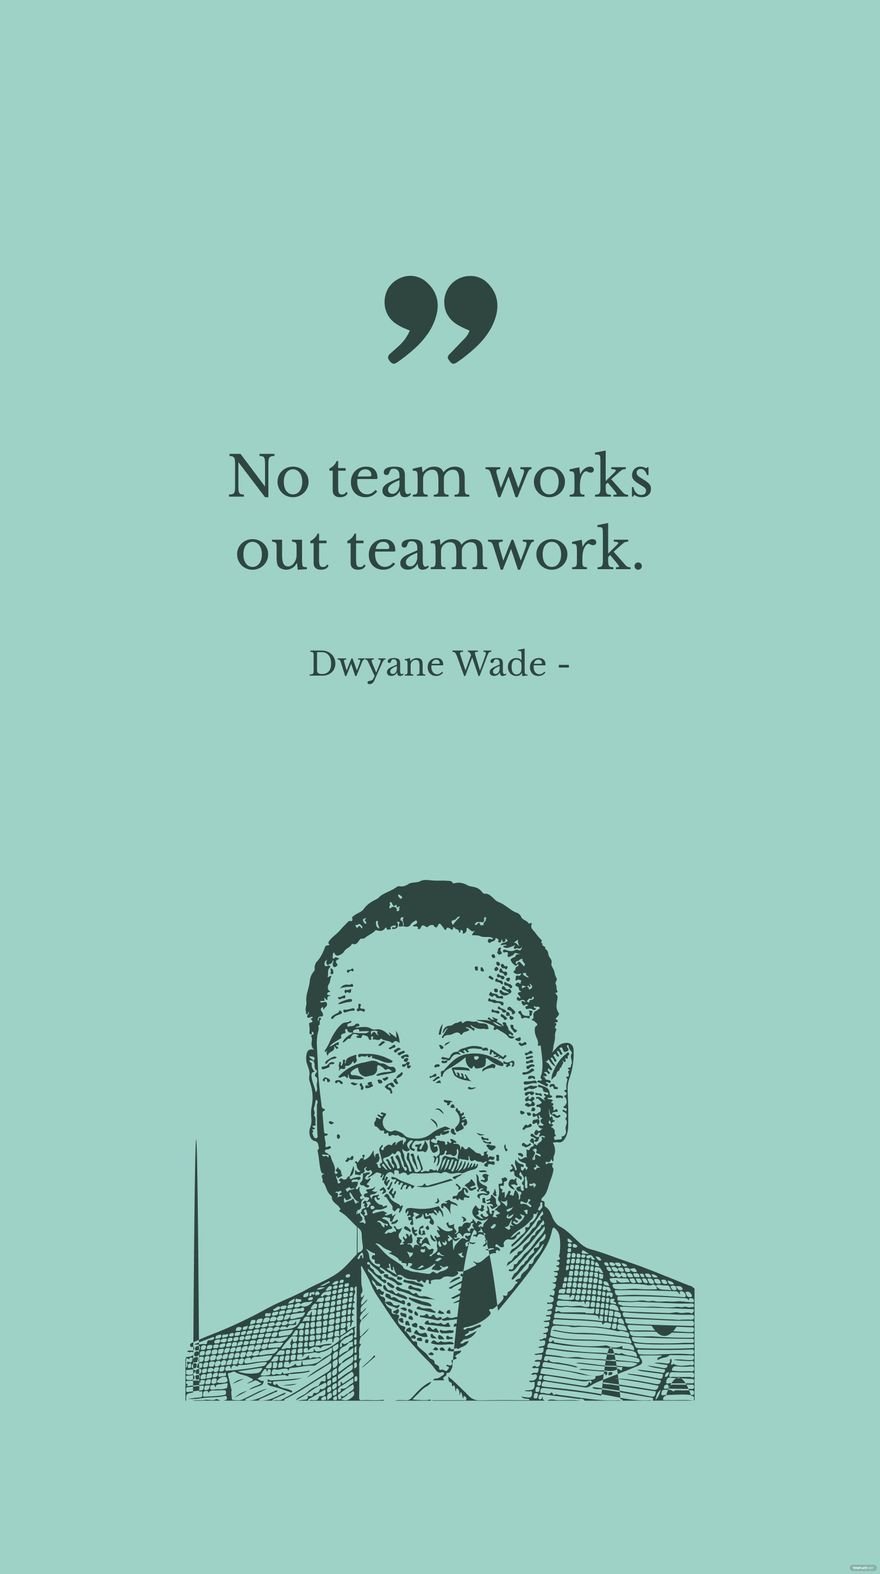 Dwyane Wade - No team works out teamwork.